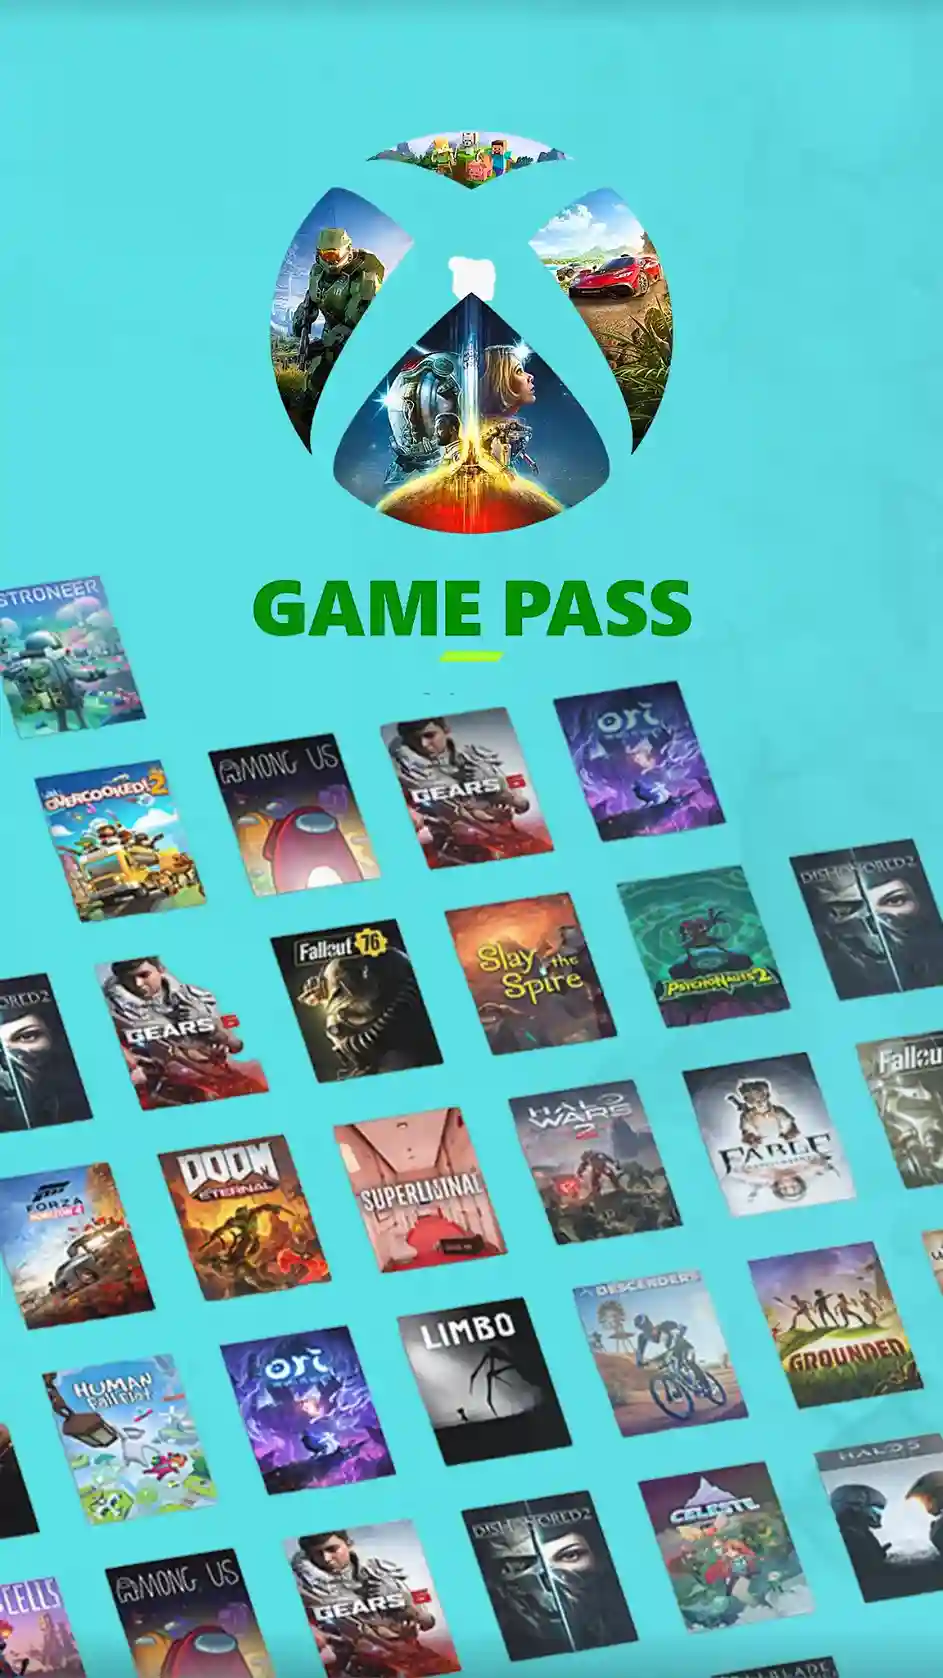 Lançamentos do Xbox Game Pass - Outubro 2023